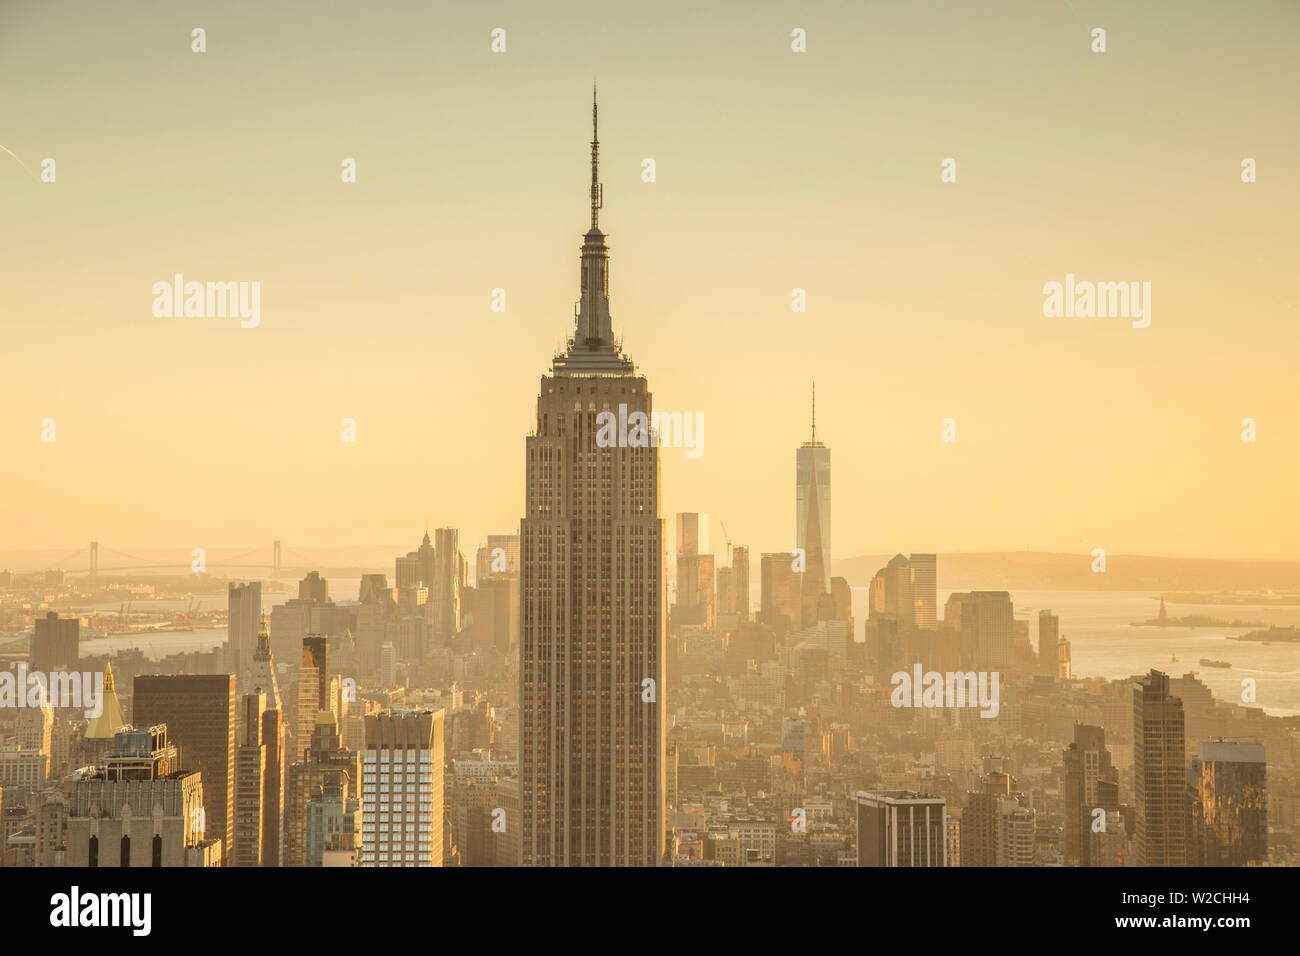 Empire State Building (One World Trade Center behind), Manhattan, New York City, New York, USA Stock Photo